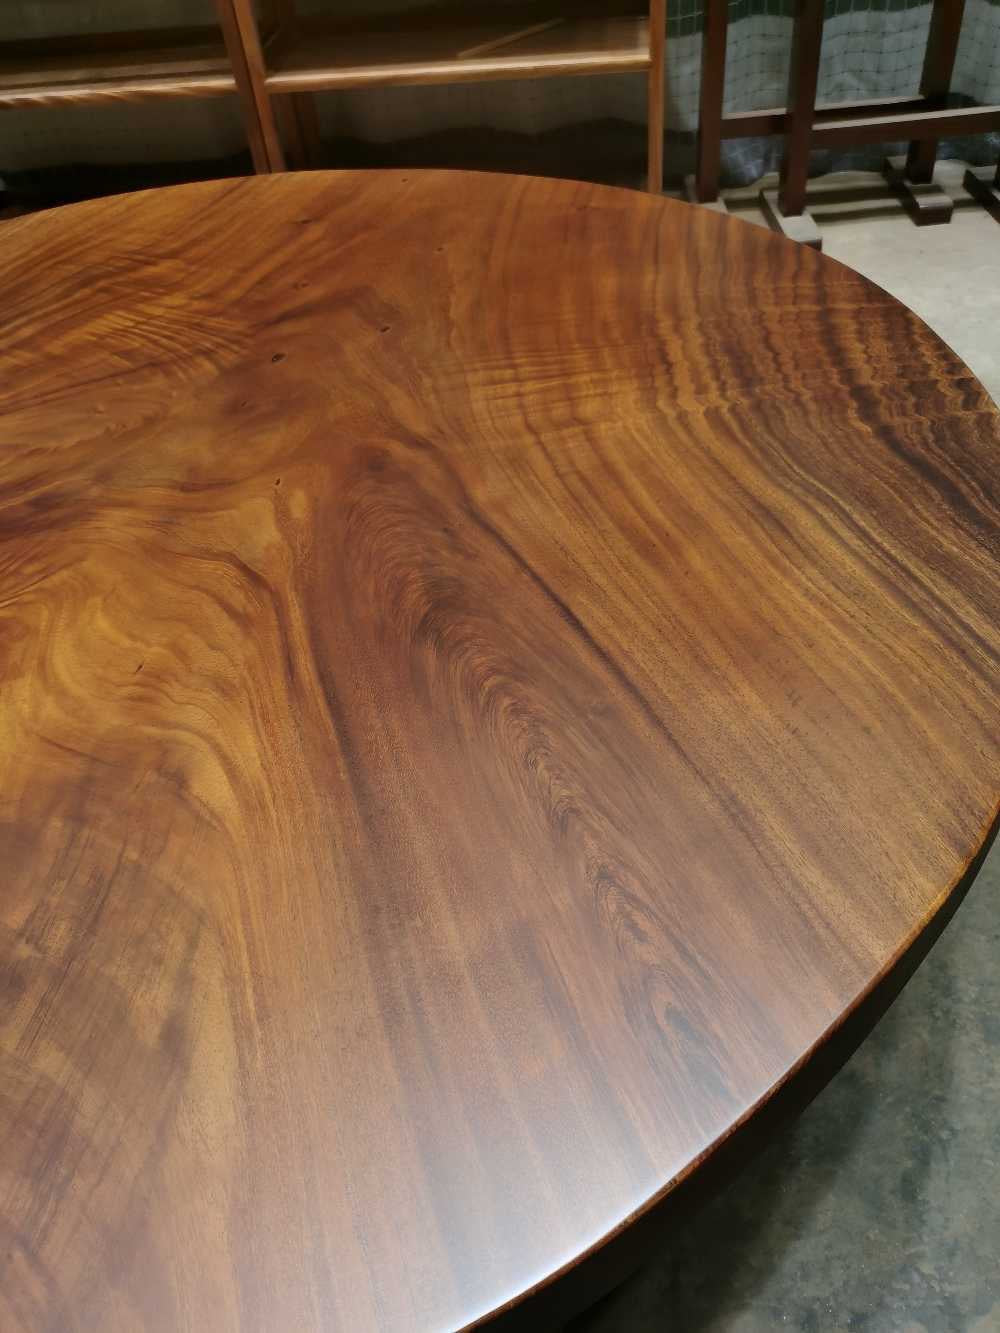 mesa redonda de madera antigua, mesa redonda de madera en bruto, tableros de mesa redonda de madera maciza